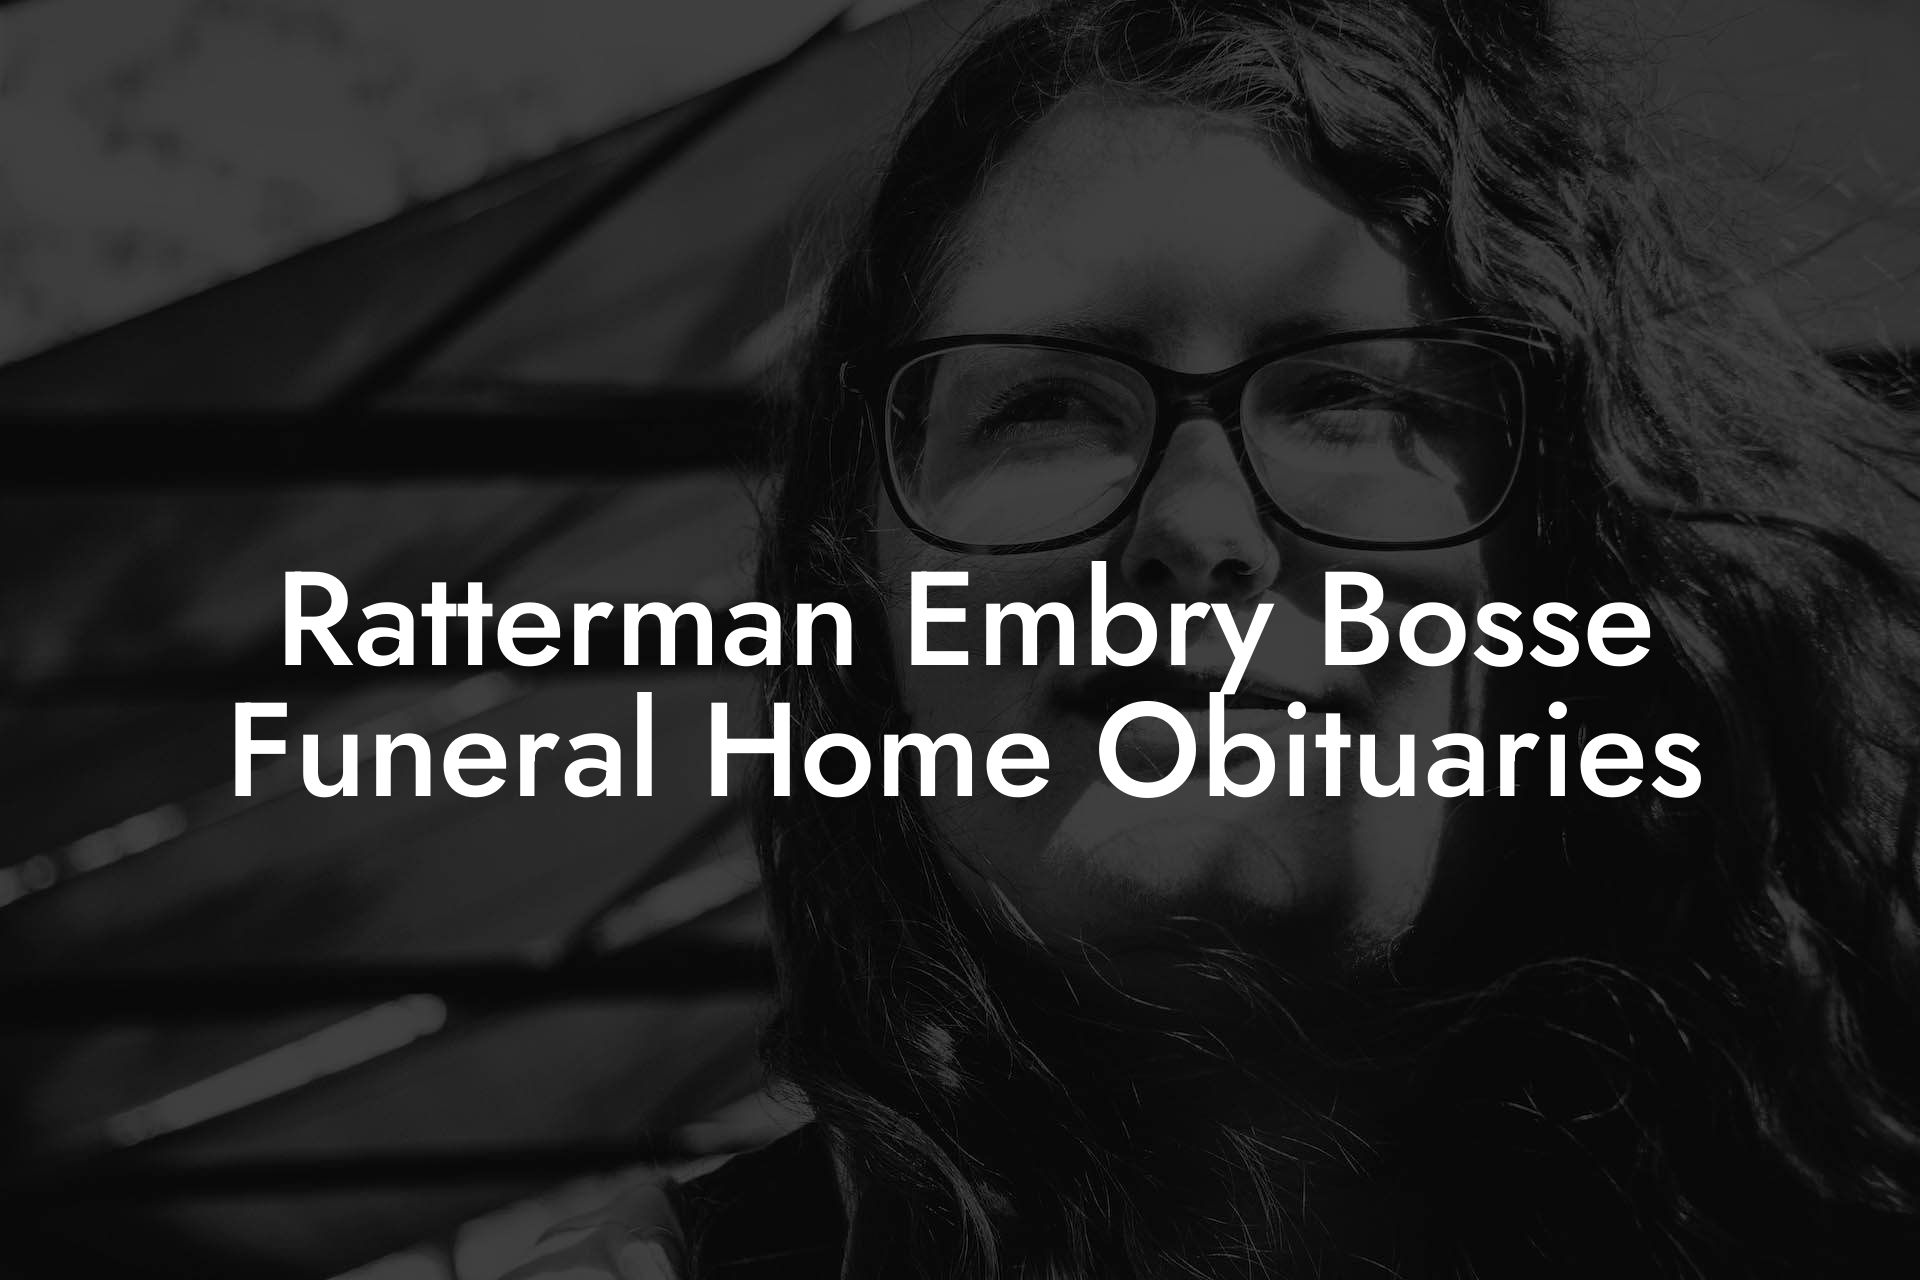 Ratterman Embry Bosse Funeral Home Obituaries